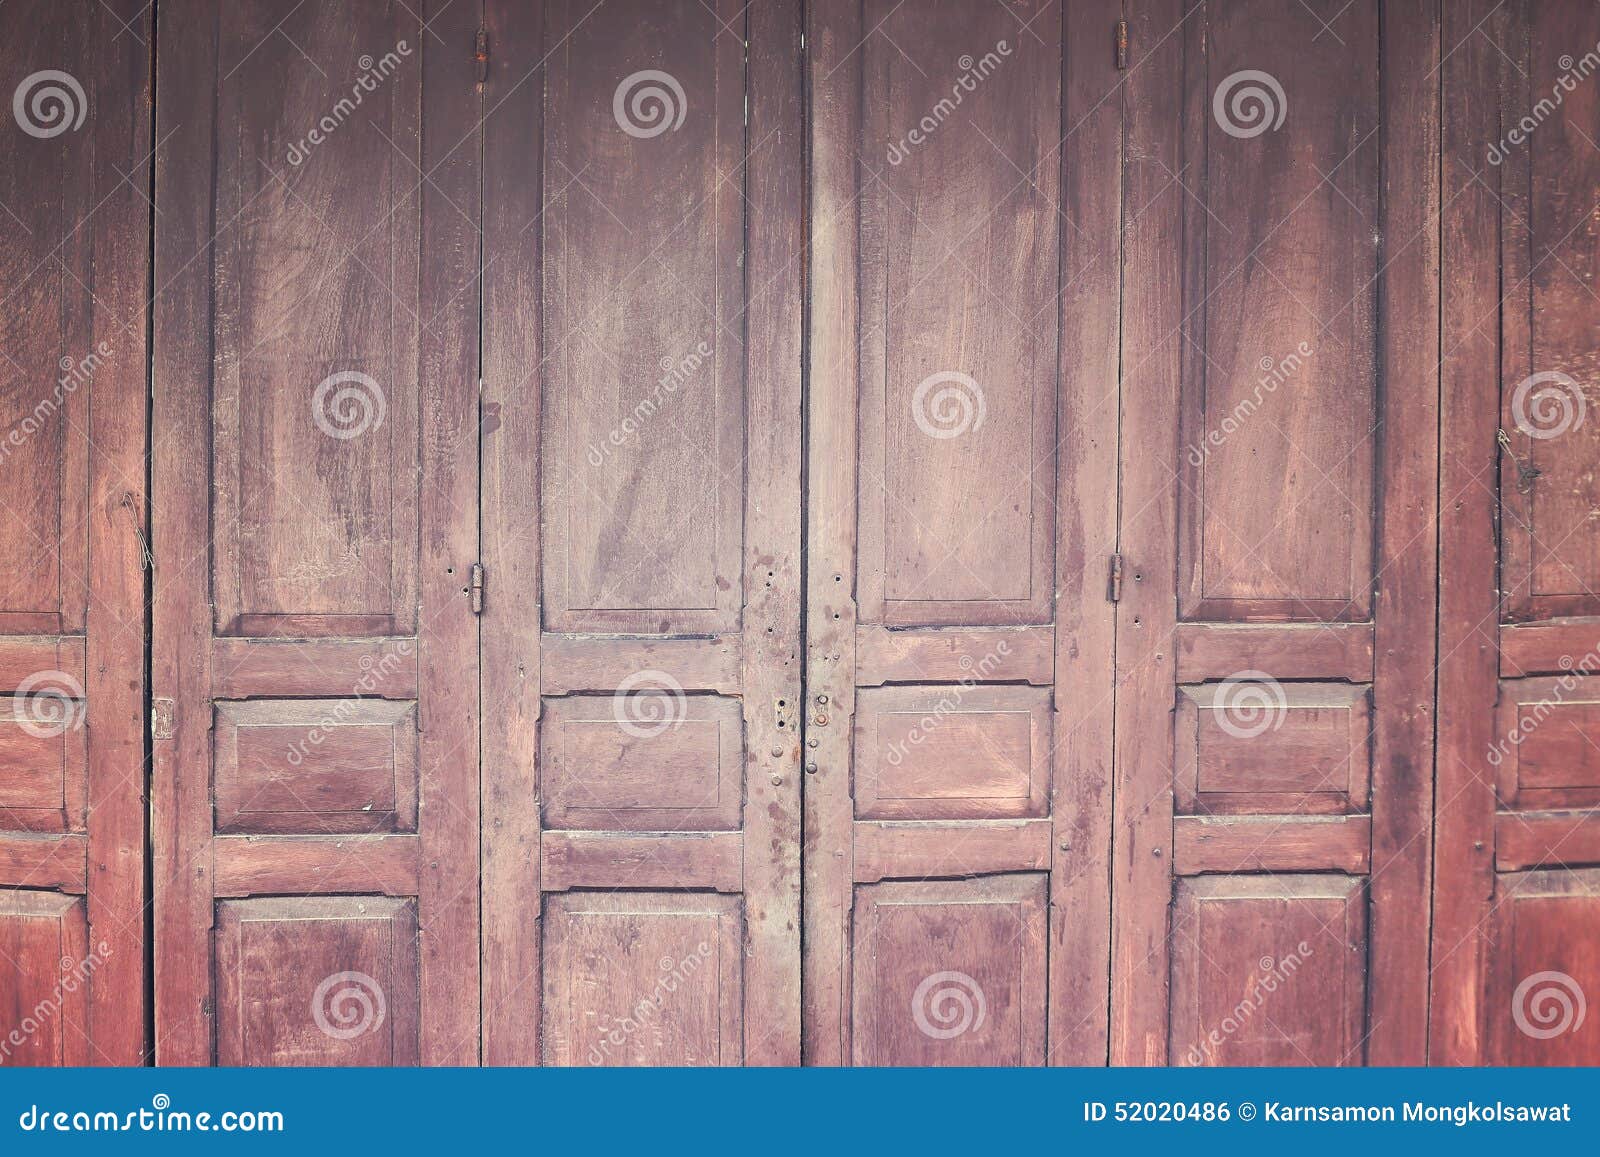 Vintage Wooden Folding Door, Retro Style Image Stock Photo - Image of ...